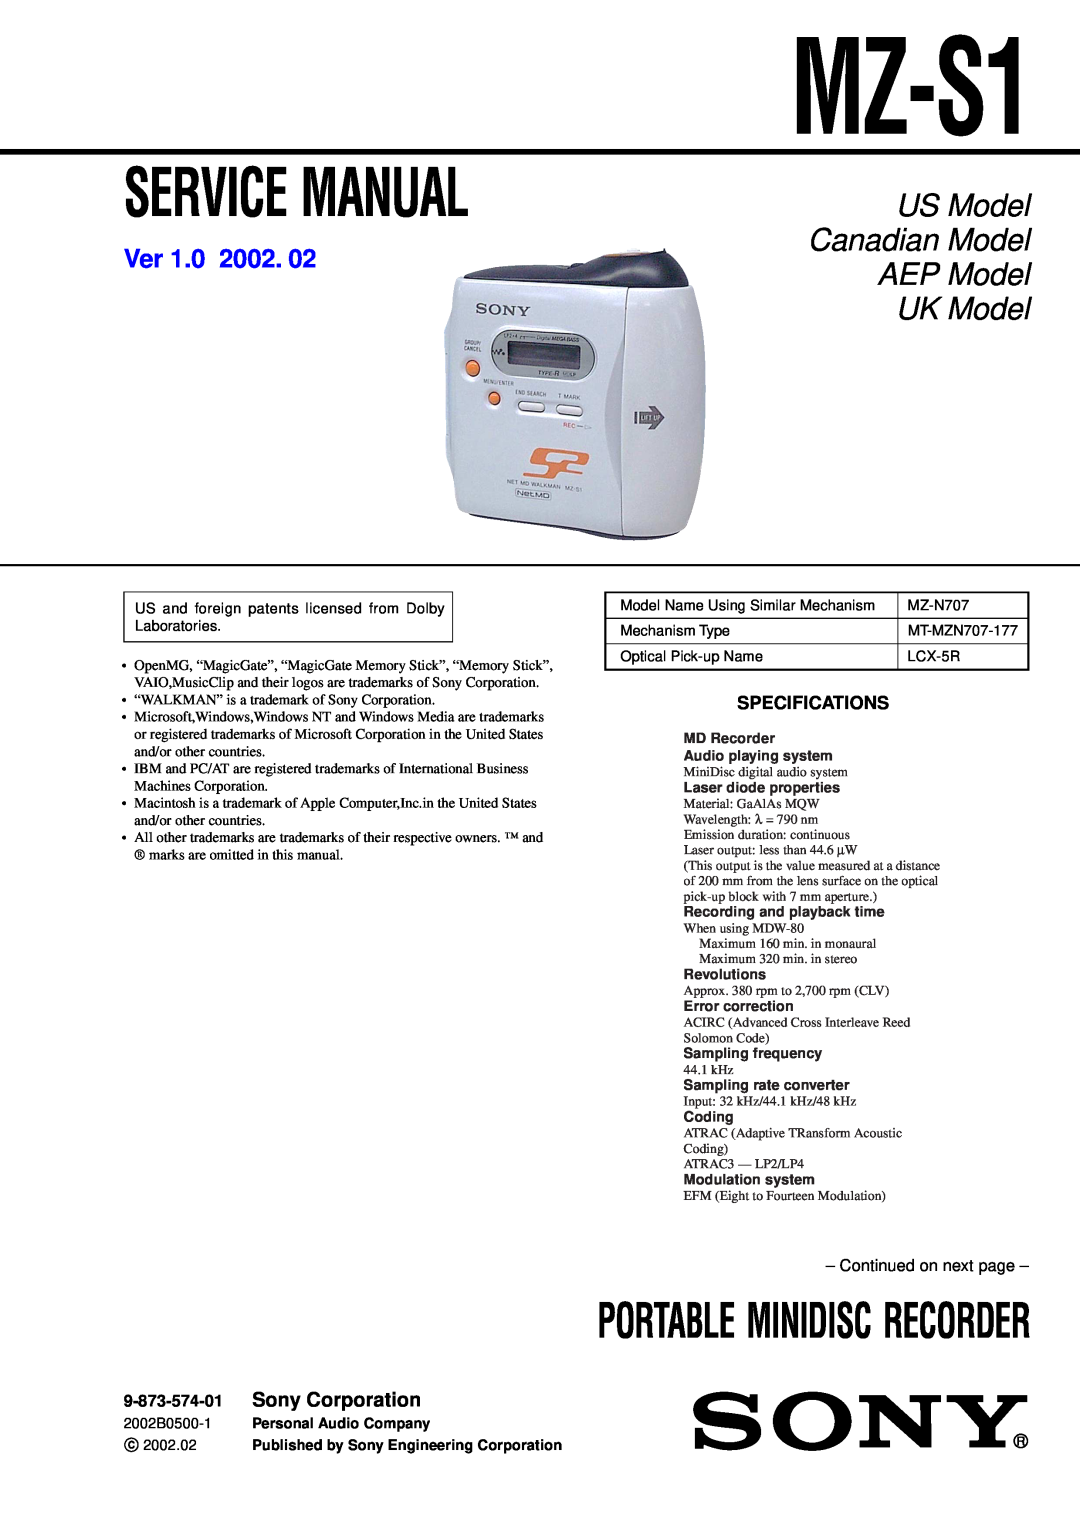 Sony MZ-S1 service manual Portable Minidisc Recorder, US Model, Canadian Model, AEP Model, UK Model, Ver, Sony Corporation 